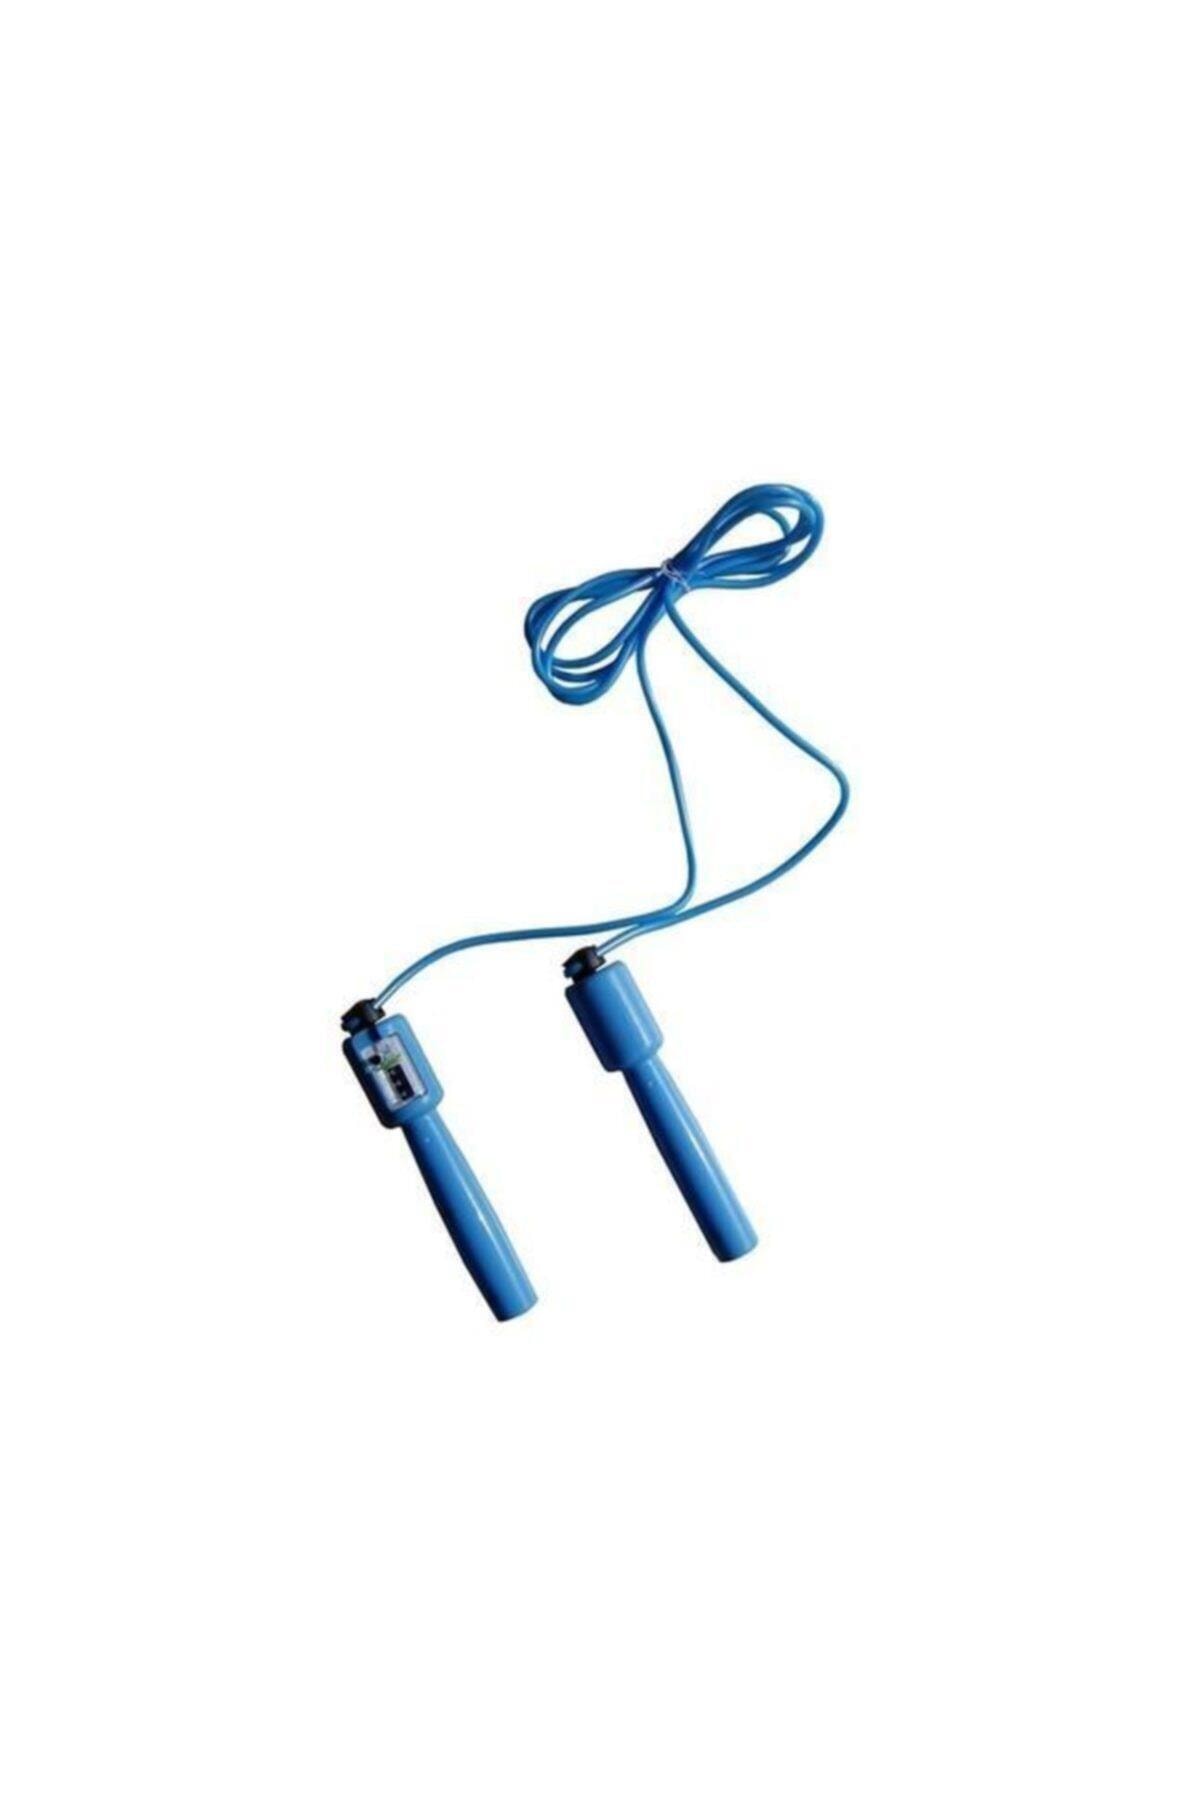 Tellen Lengte Verstelbare Display Blauw Jump Rope